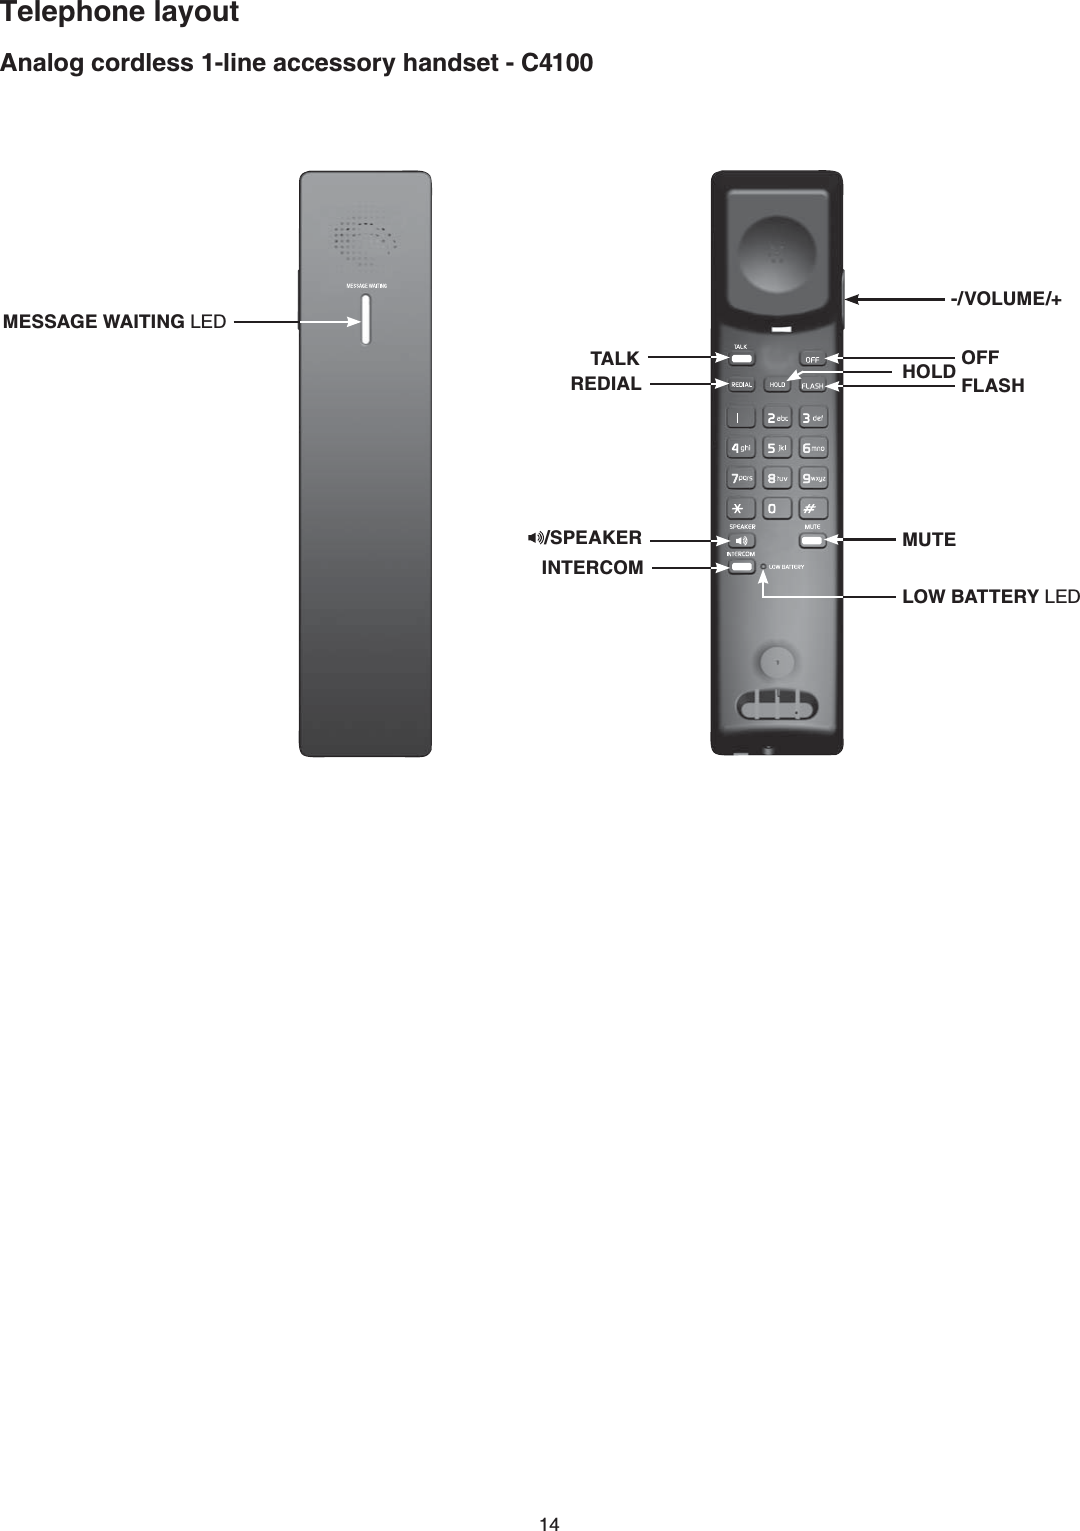 14Analog cordless 1-line accessory handset - C4100Telephone layoutTALKREDIAL HOLD OFFFLASHINTERCOMMUTE-/VOLUME/+MESSAGE WAITING LED/SPEAKERLOW BATTERY LED